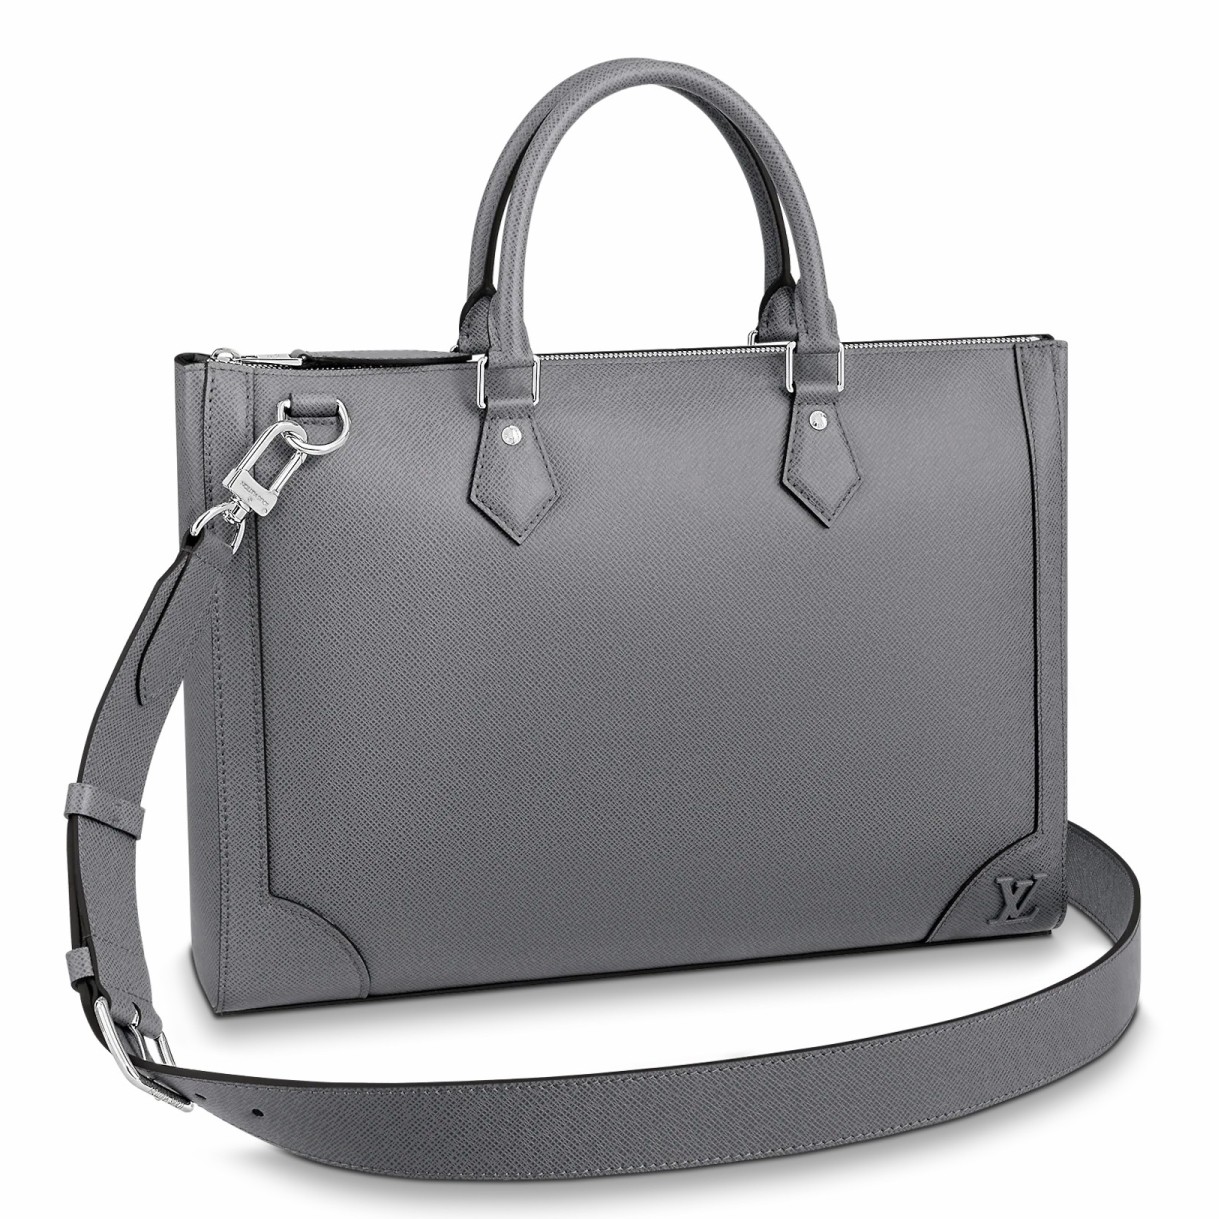 Replica Louis Vuitton Men's Briefcases Bags for Sale